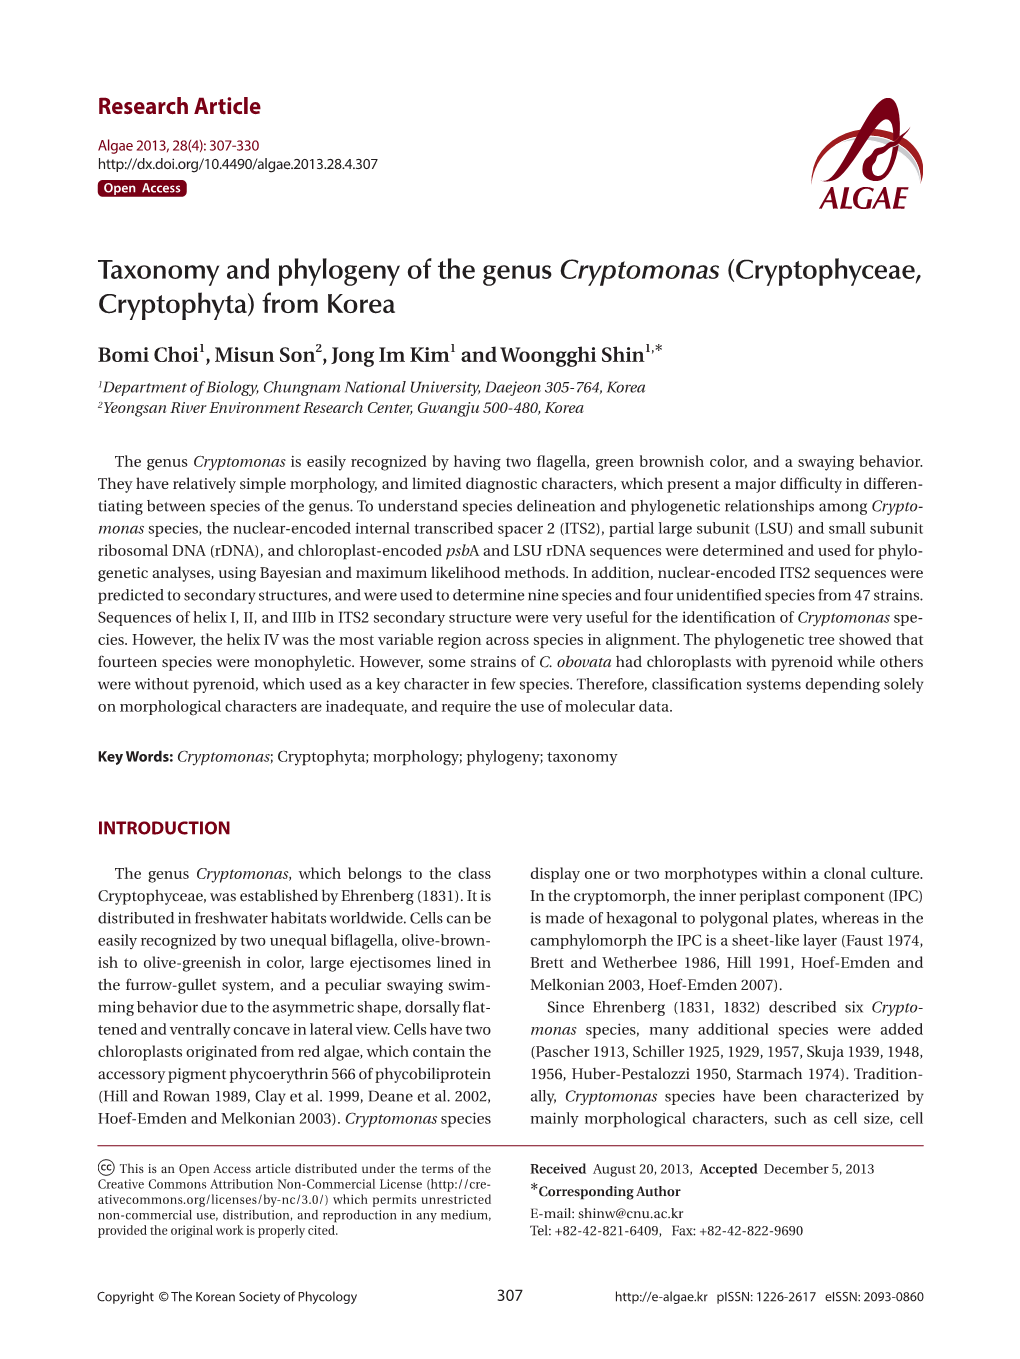 Taxonomy and Phylogeny of the Genus Cryptomonas (Cryptophyceae, Cryptophyta) from Korea